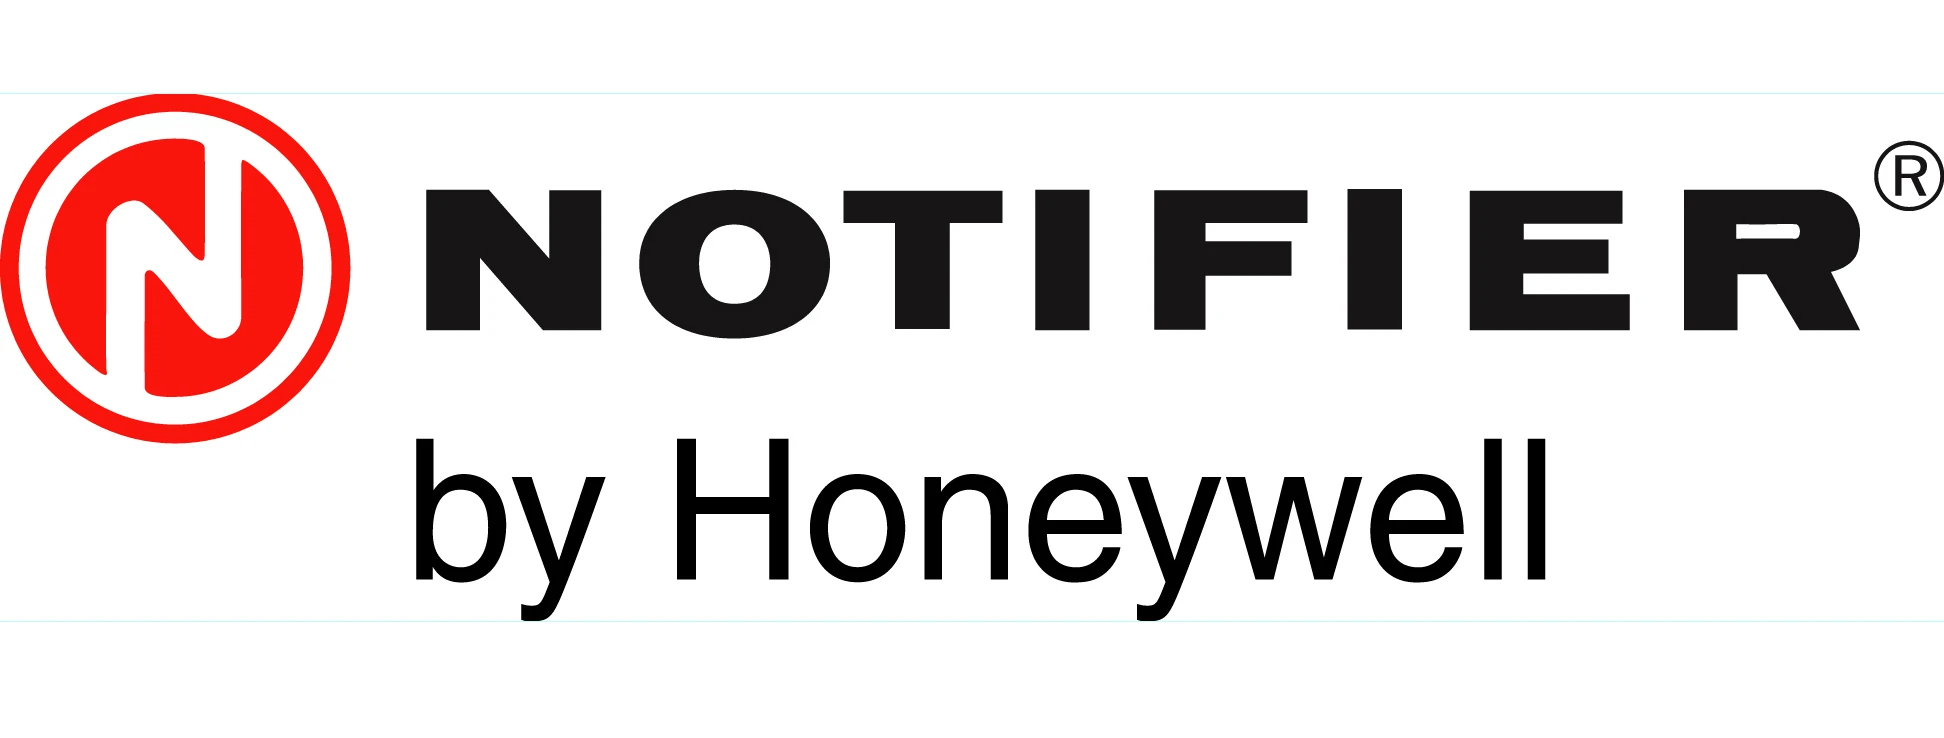 productos de marca notifier de honeywell